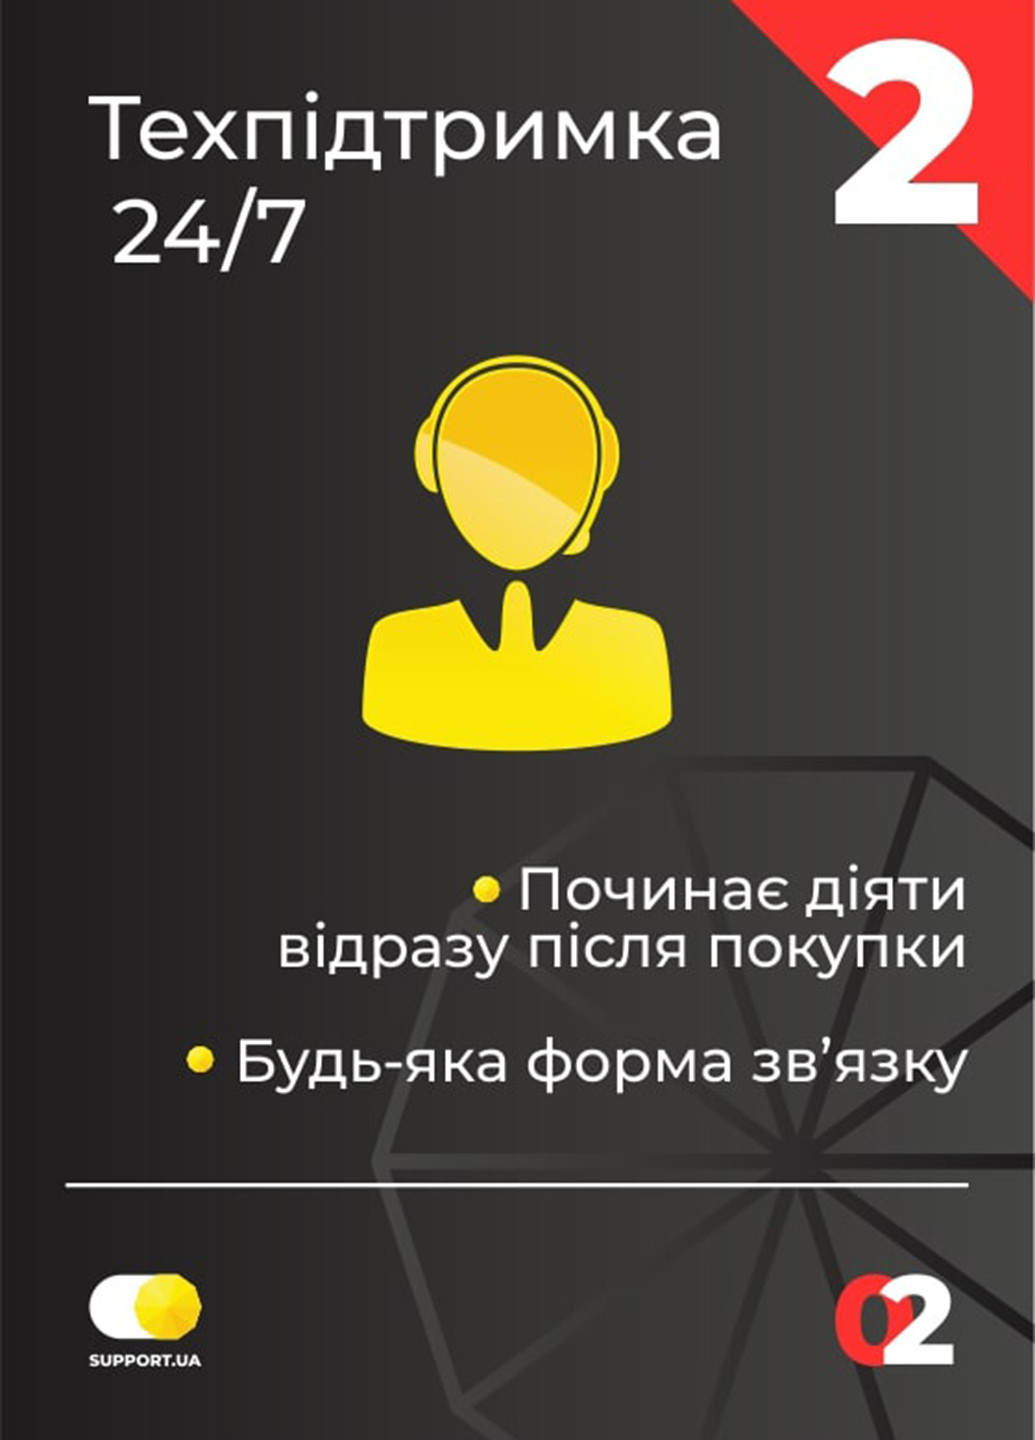 +1 год гарантии (3001-4000), Электронный сертификат от Support.ua